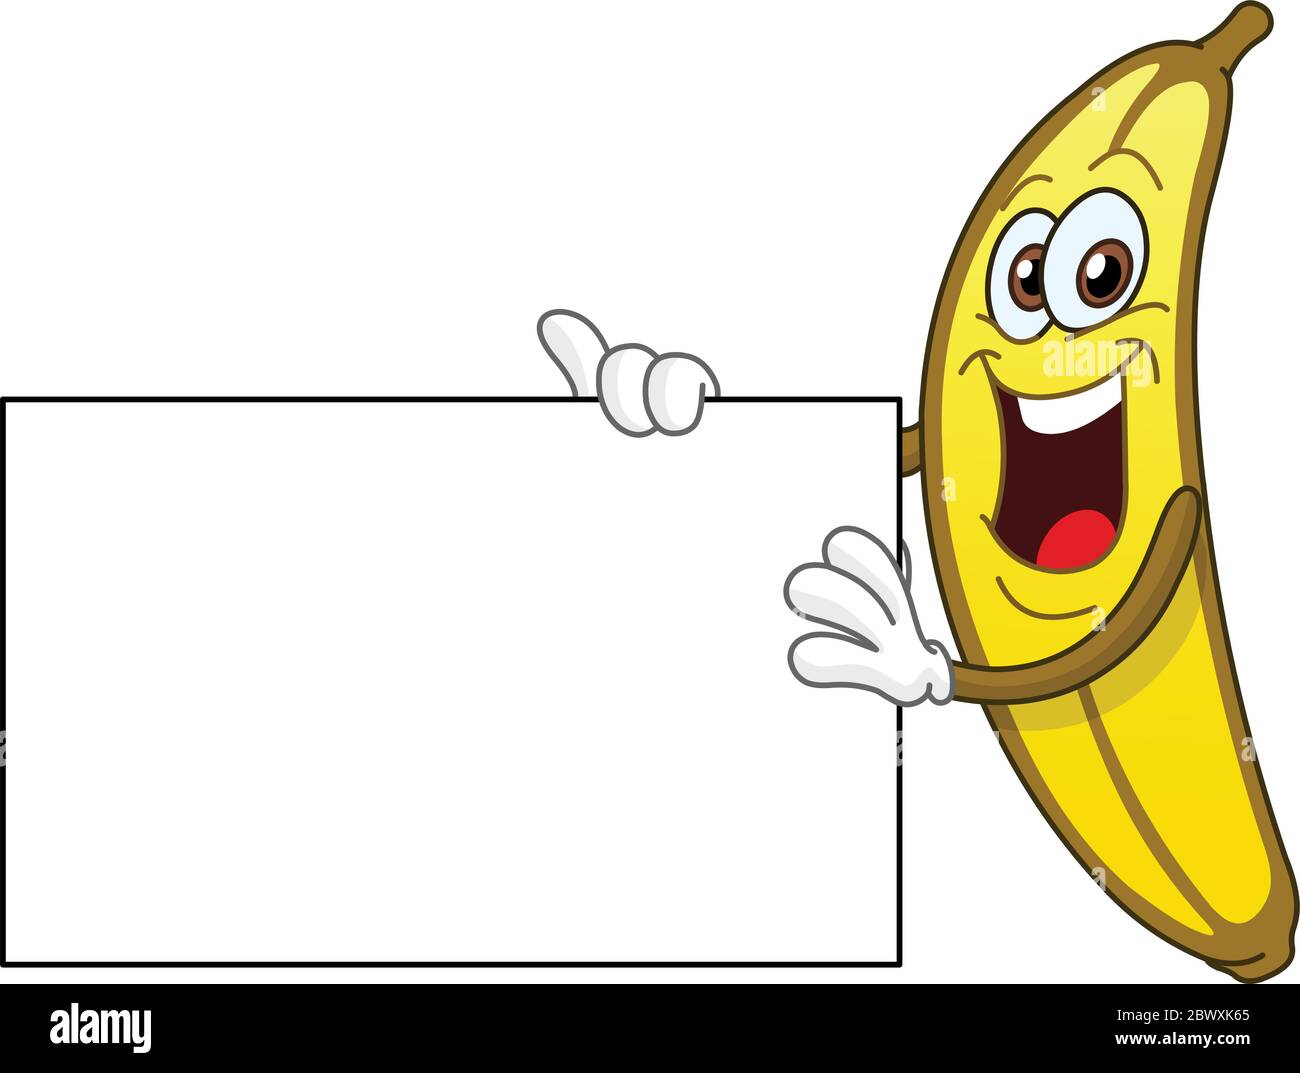 Banana Stock Vector Images - Alamy